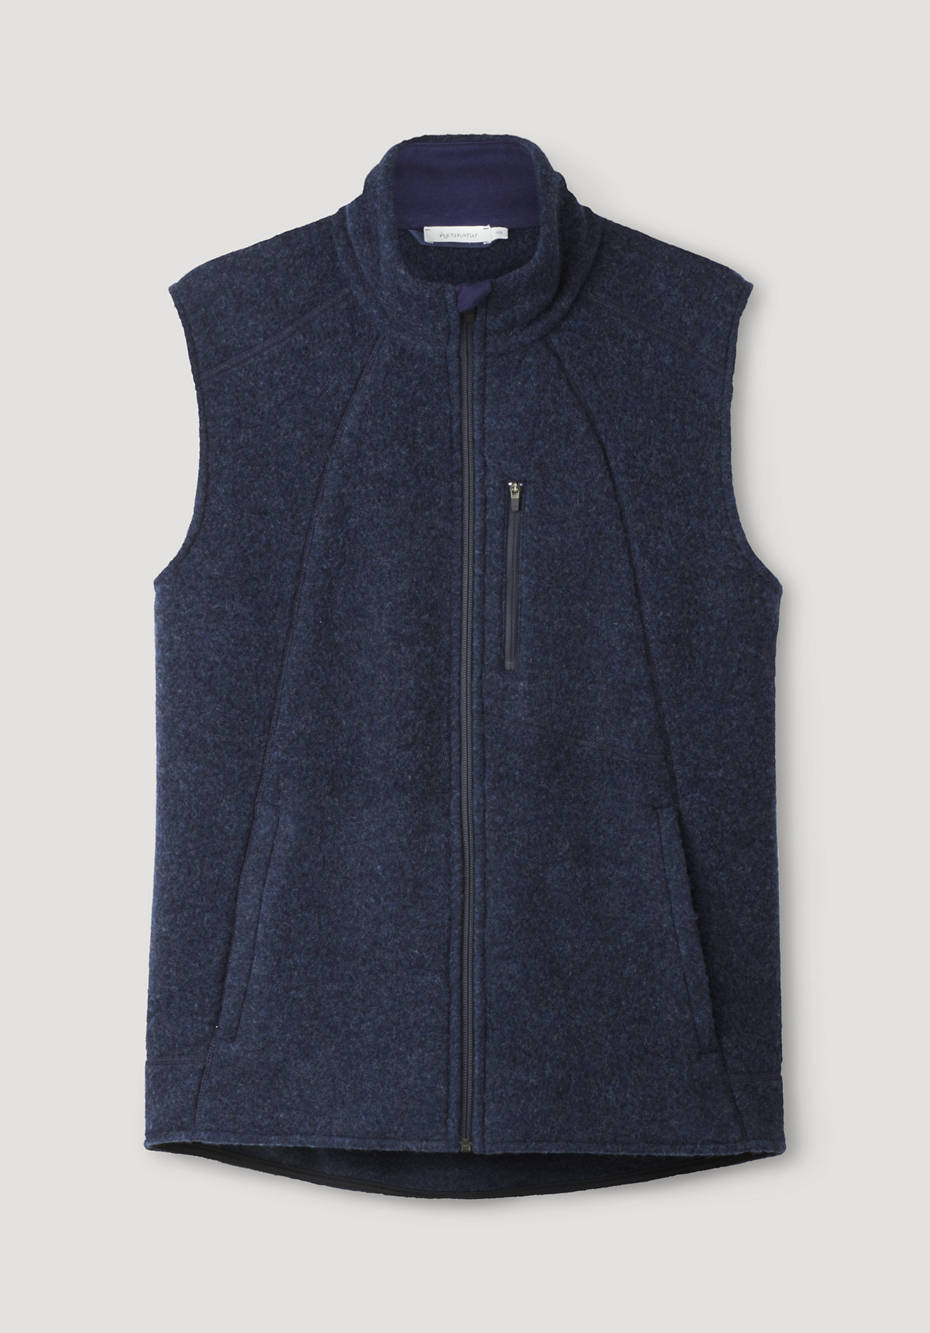 Wool fleece vest made of pure organic merino wool